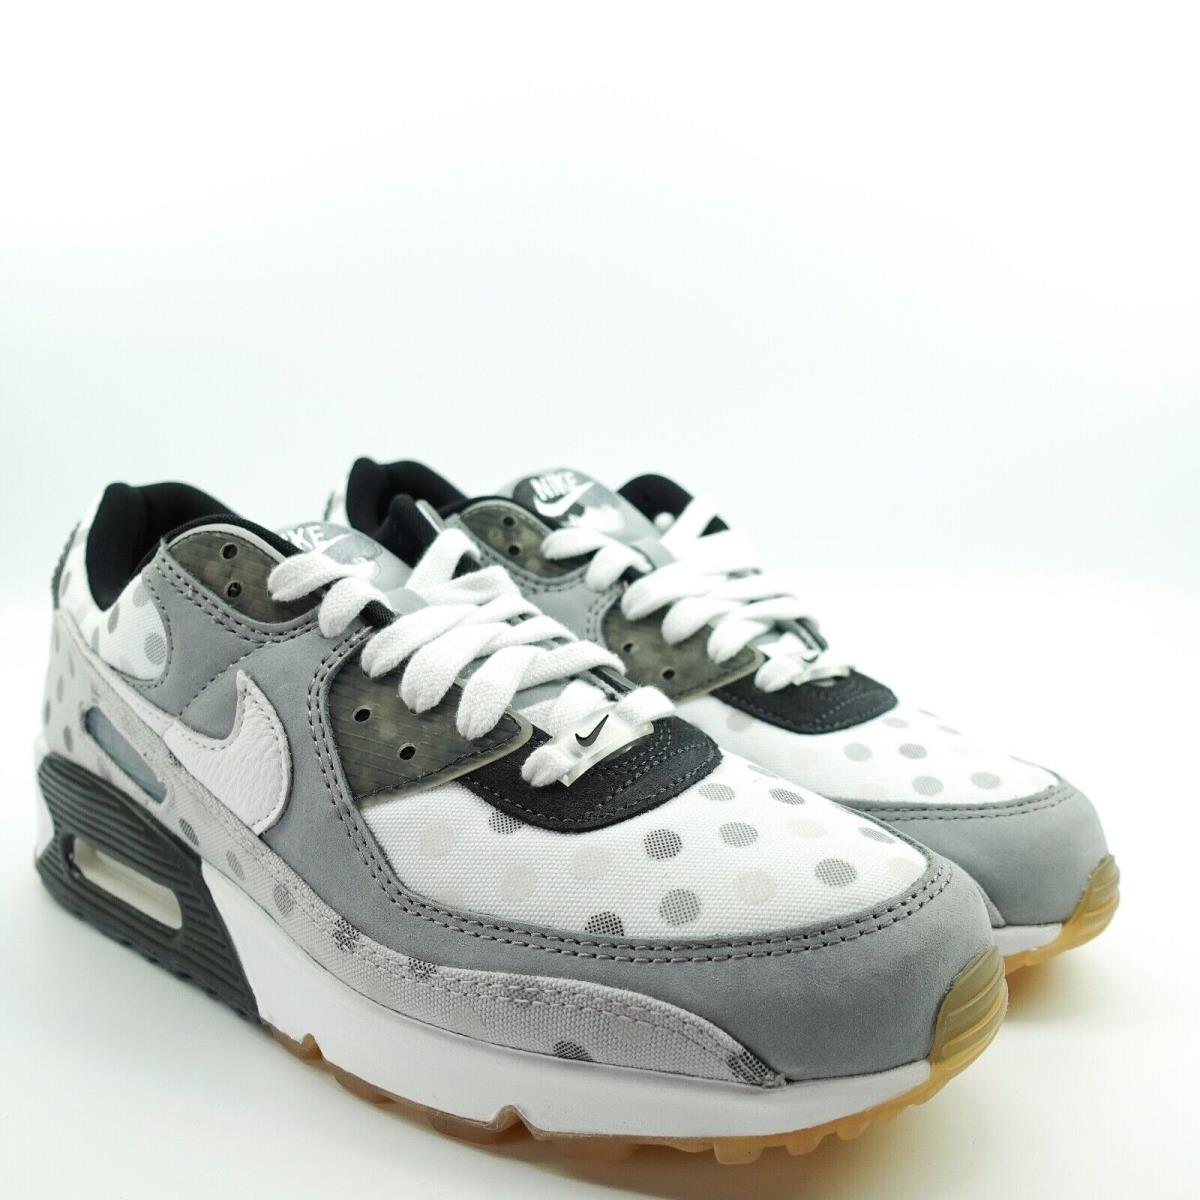 Nike shoes Air Max - Grey, Black, White 5